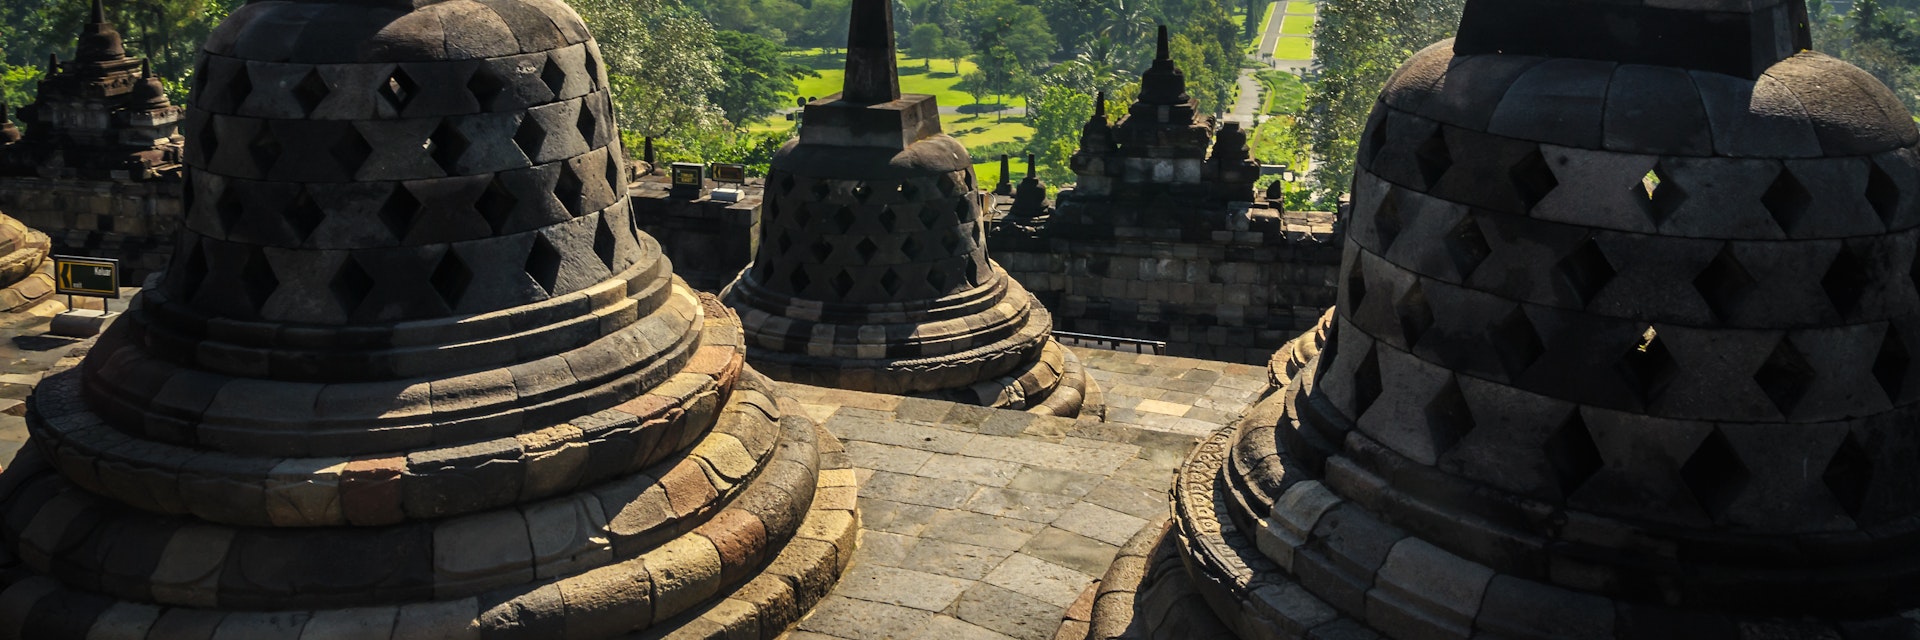 Borobudur Buddhist Temple (UNESCO World Heritage Site) - Java, Indonesia